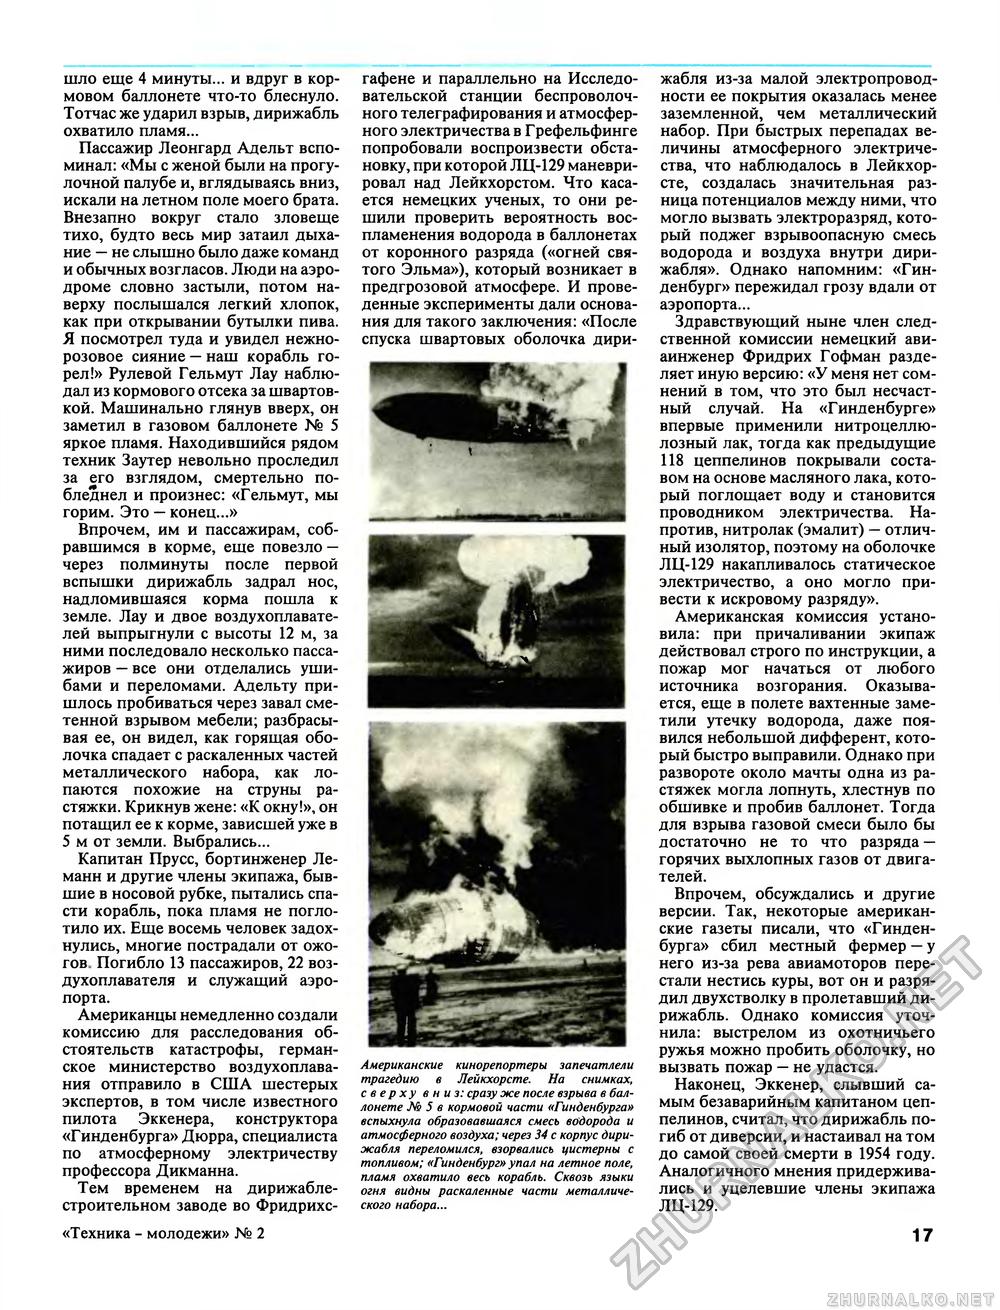 Техника - молодёжи 1993-02, страница 19